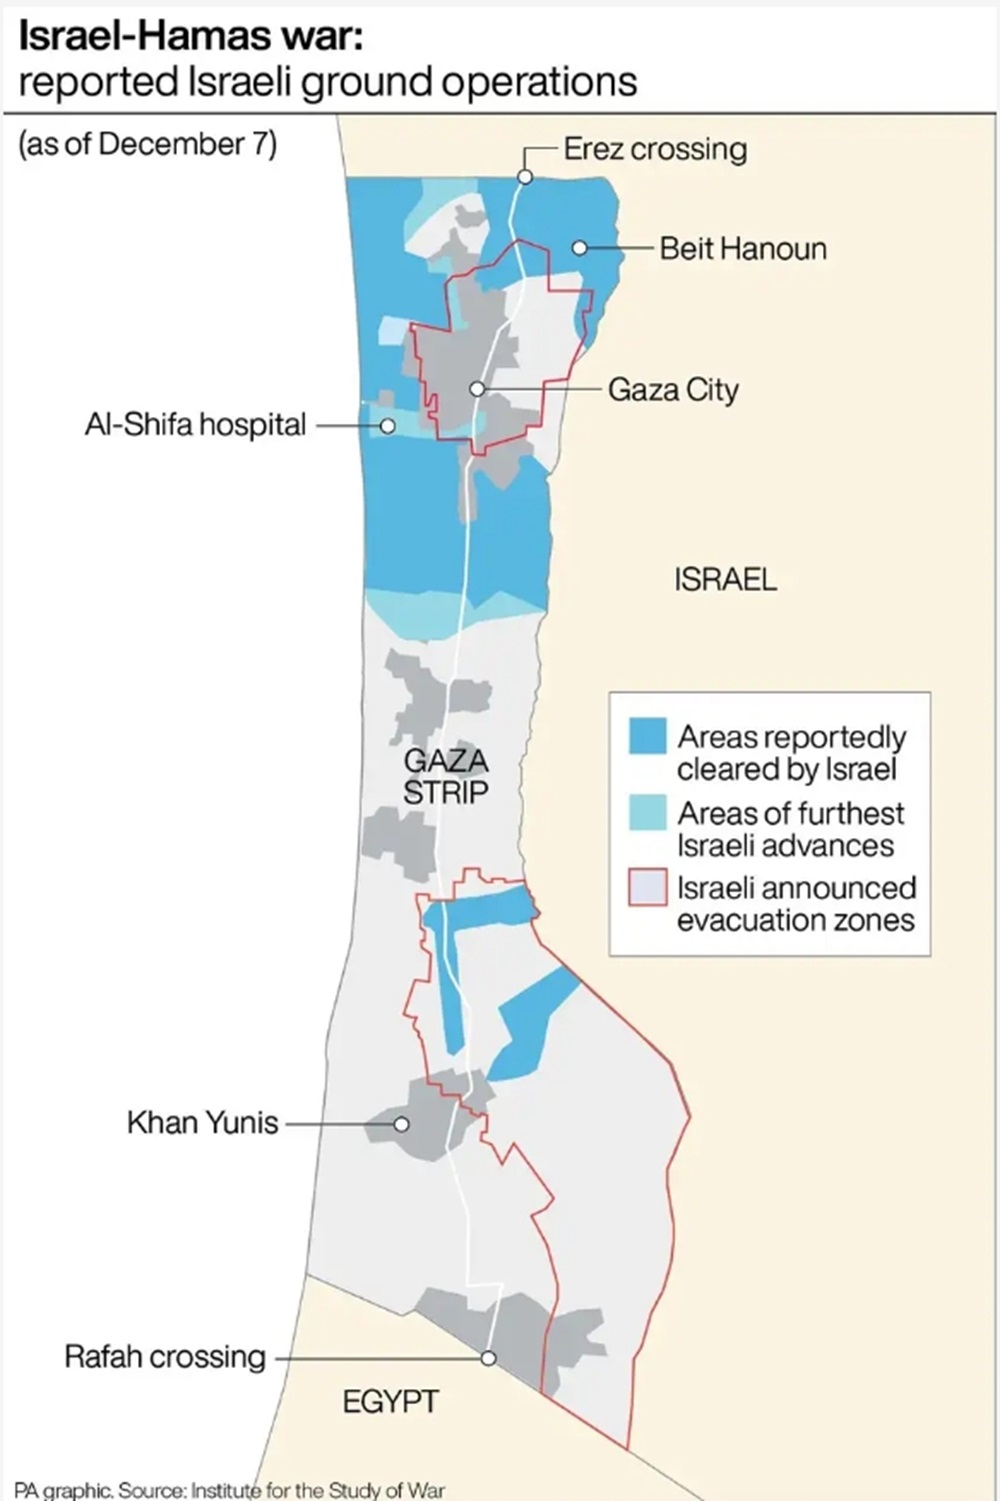 An ambush kills seven Israeli soldiers in Gaza City.